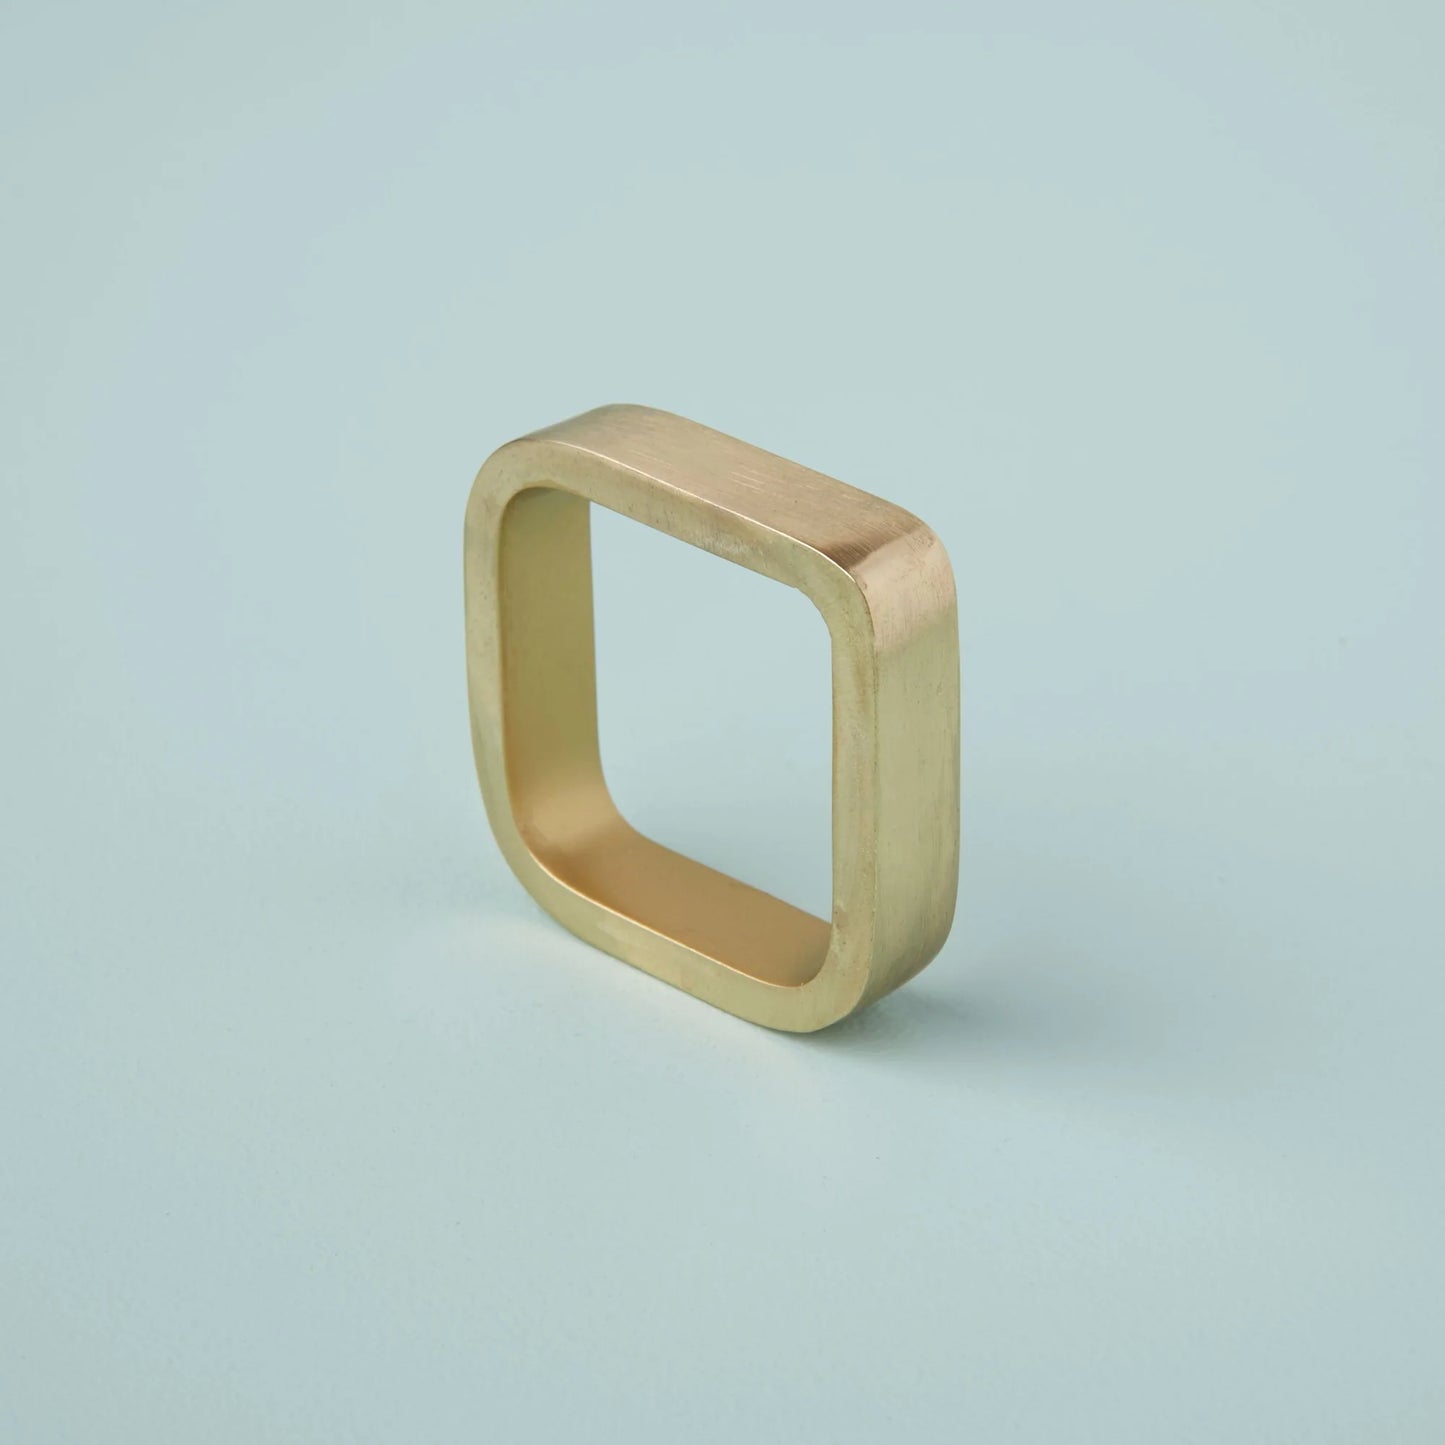 Square Napkin Ring, Gold